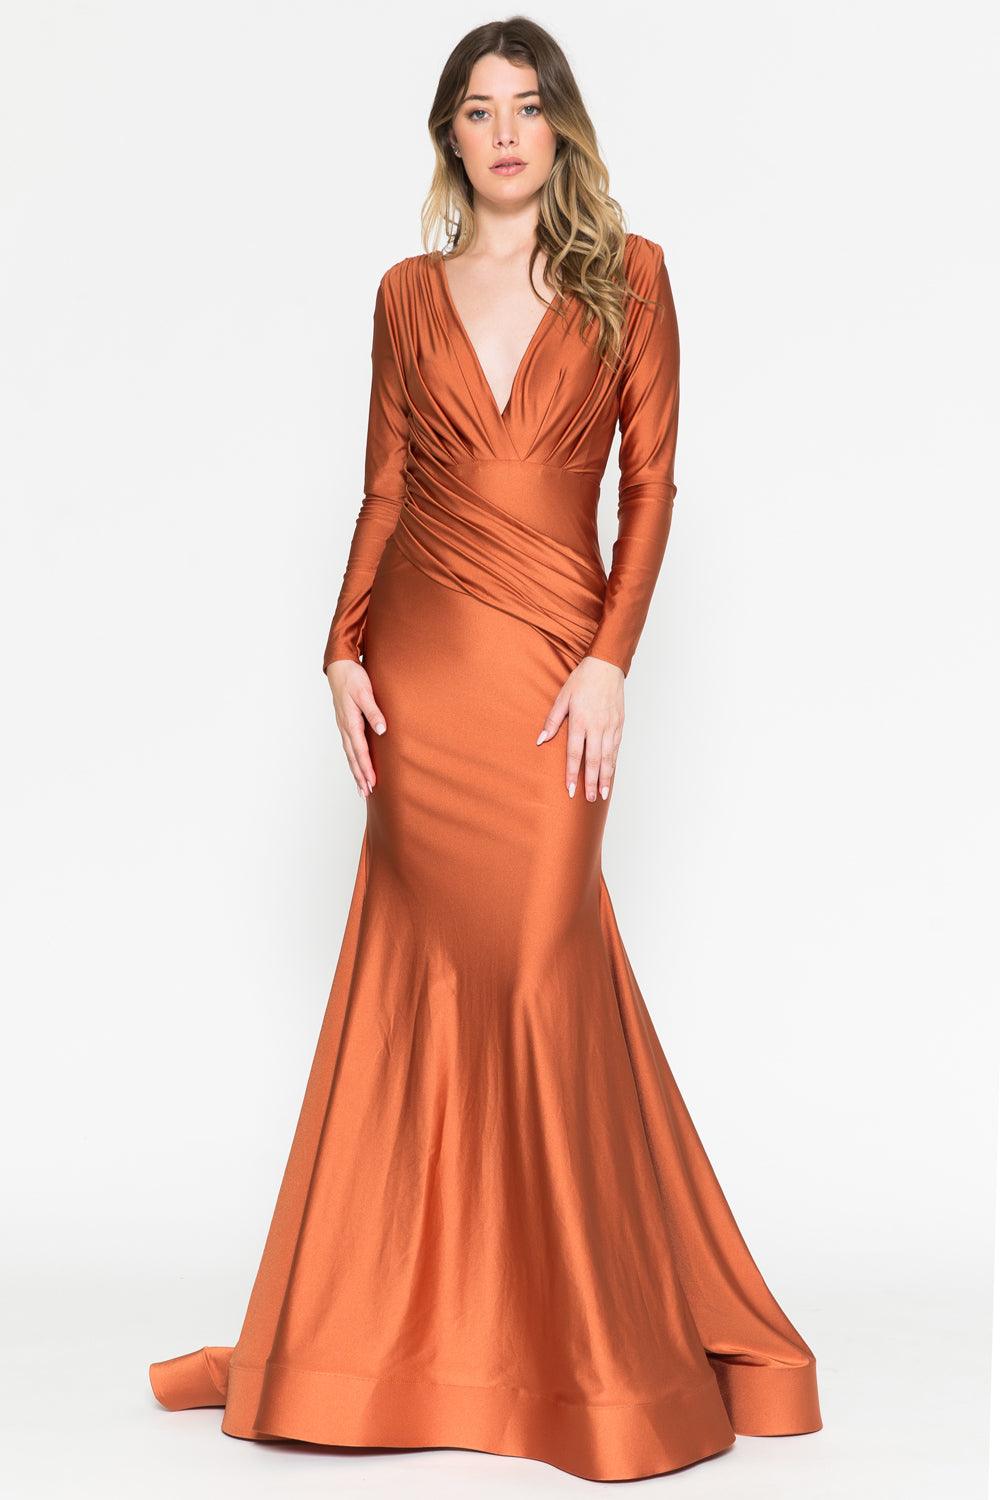 The CASSIE Dress - Rust/Burnt Orange - DOYIN LONDON